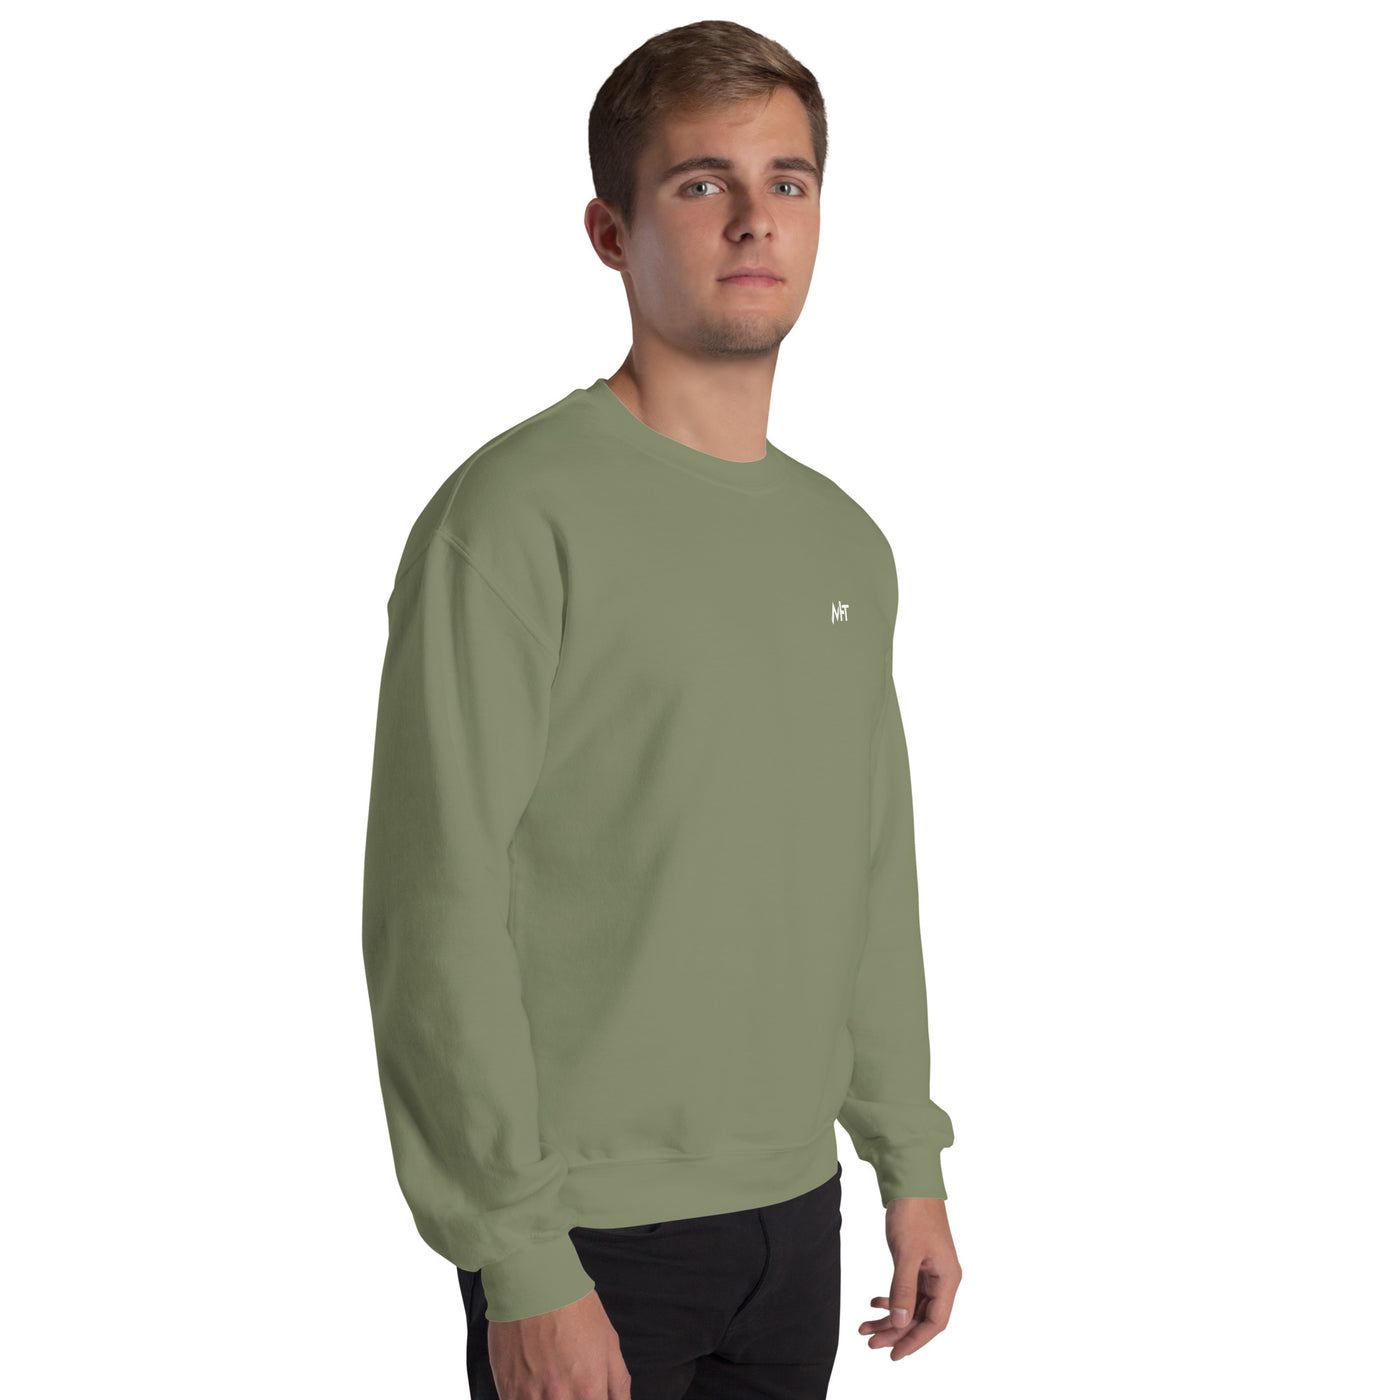 Pentester V2 - Unisex Sweatshirt